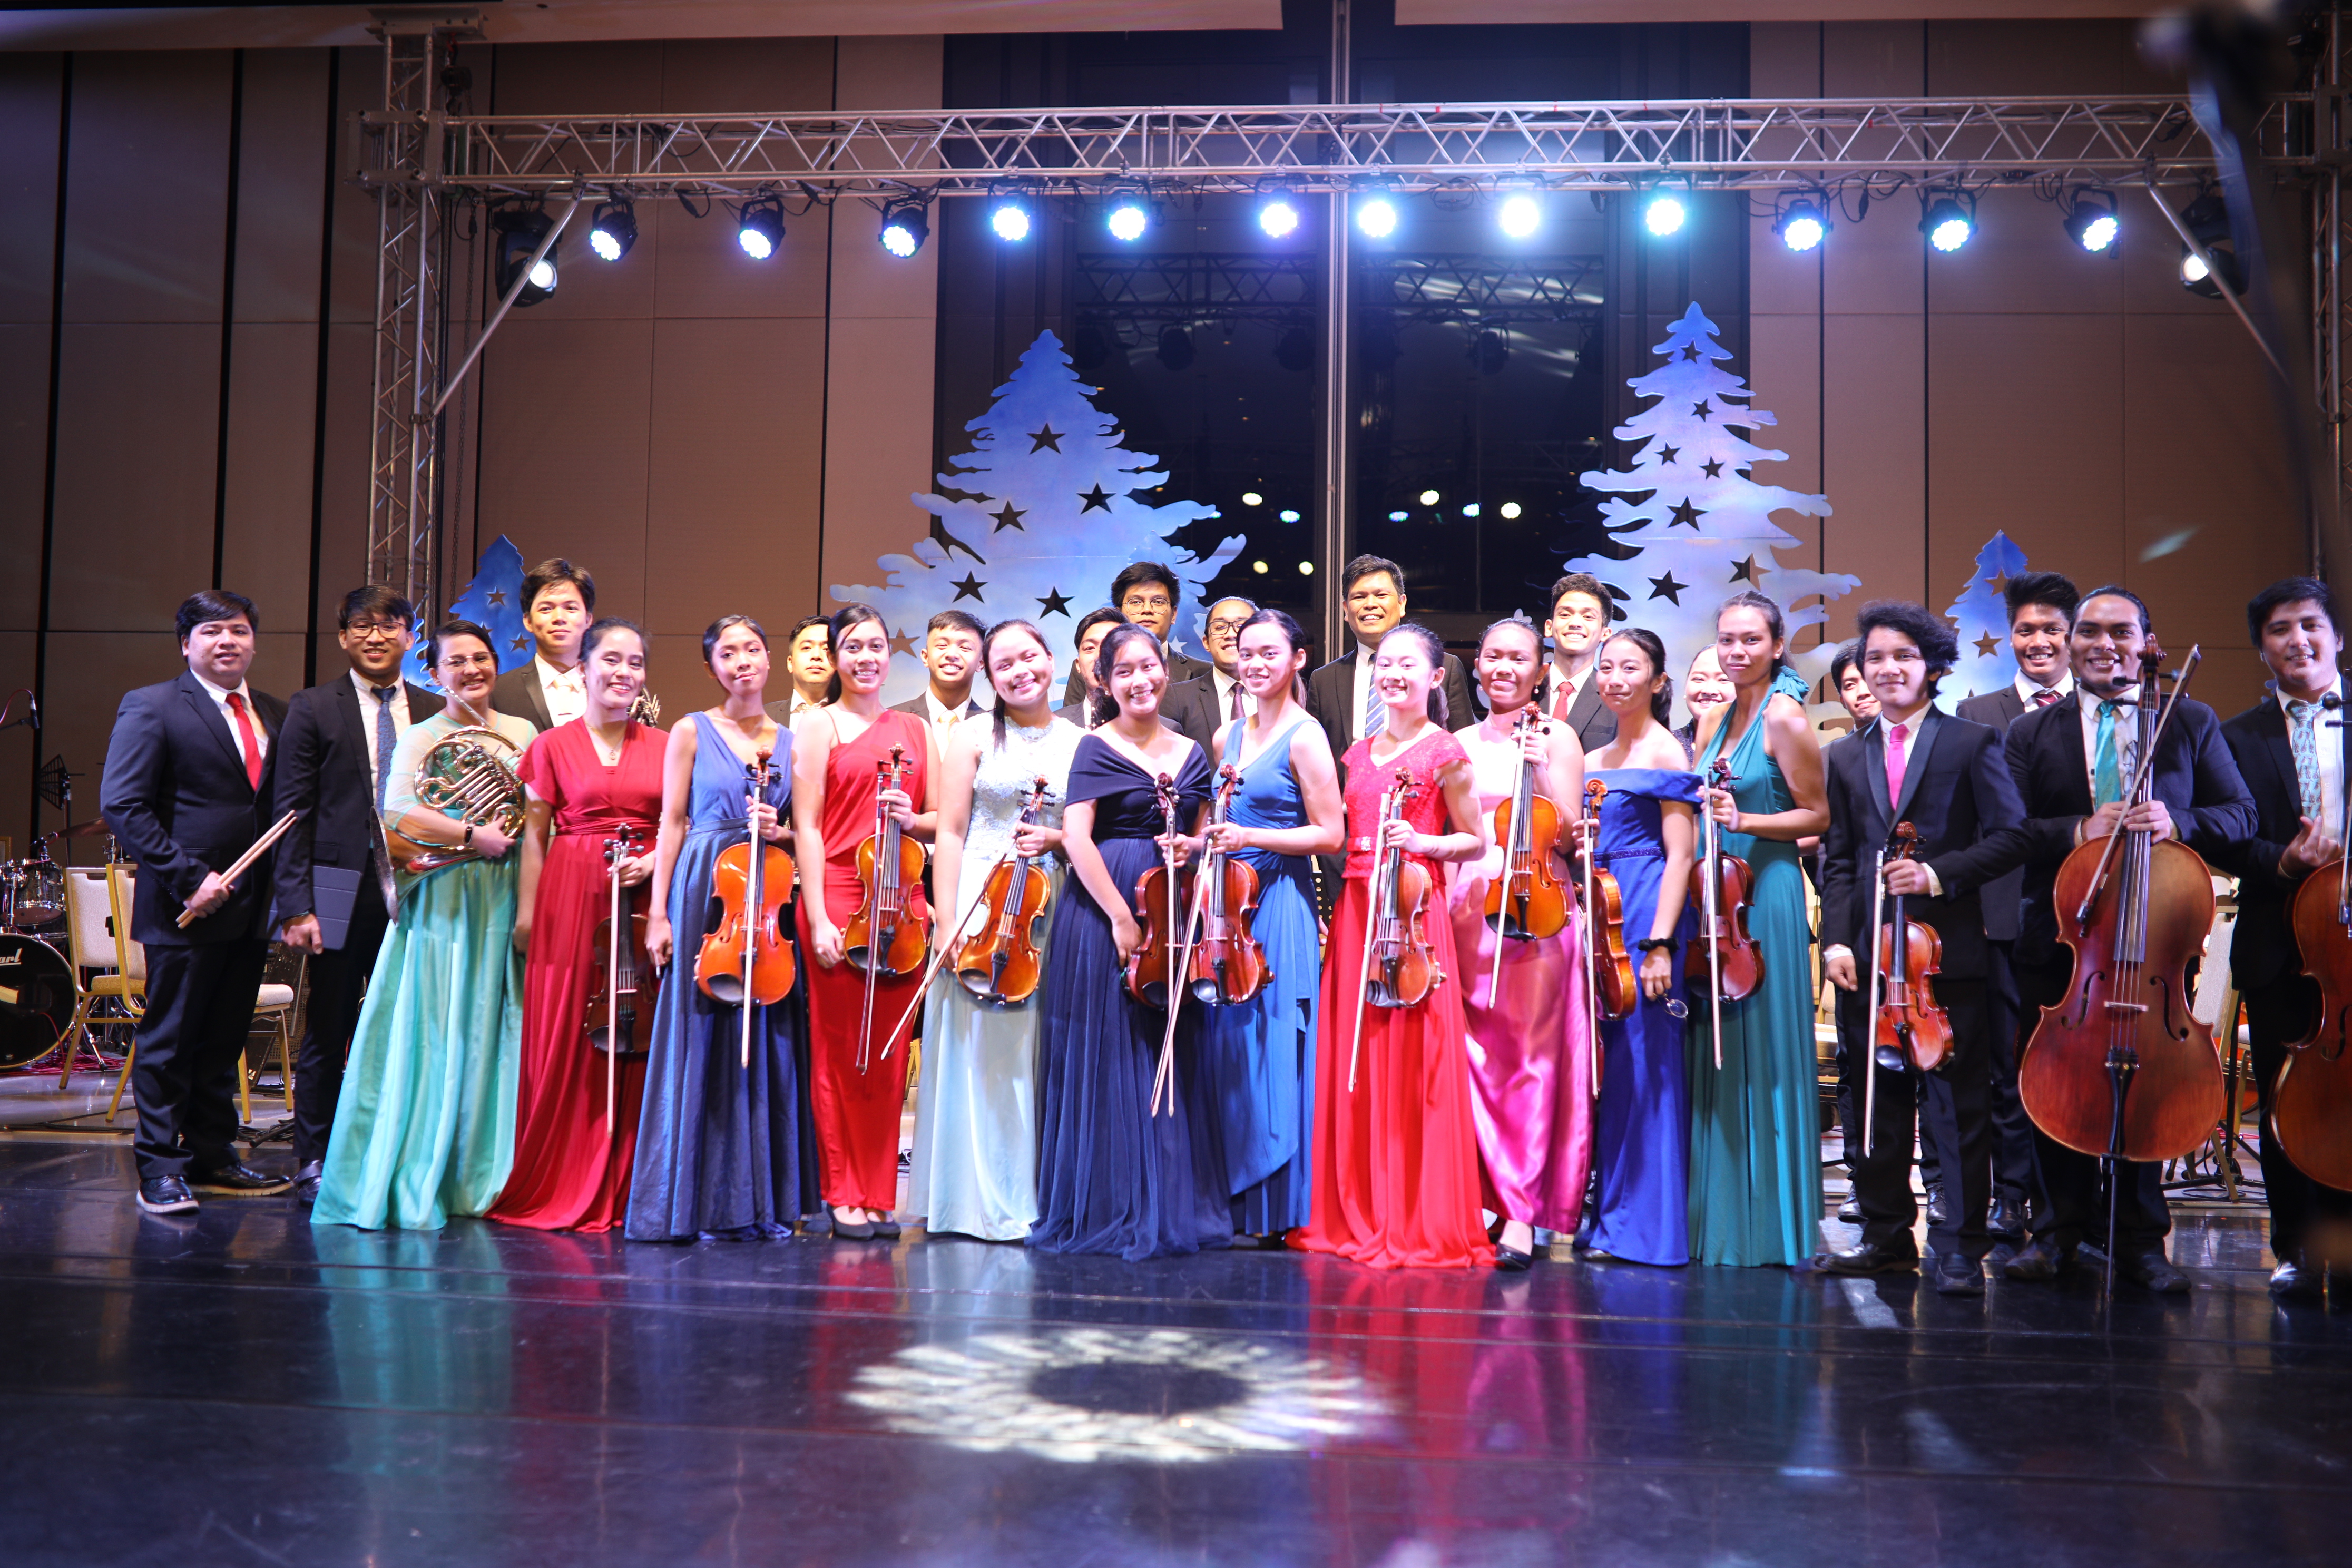 Conrad Manila celebrates “Dazzling Holidays” this Christmas season